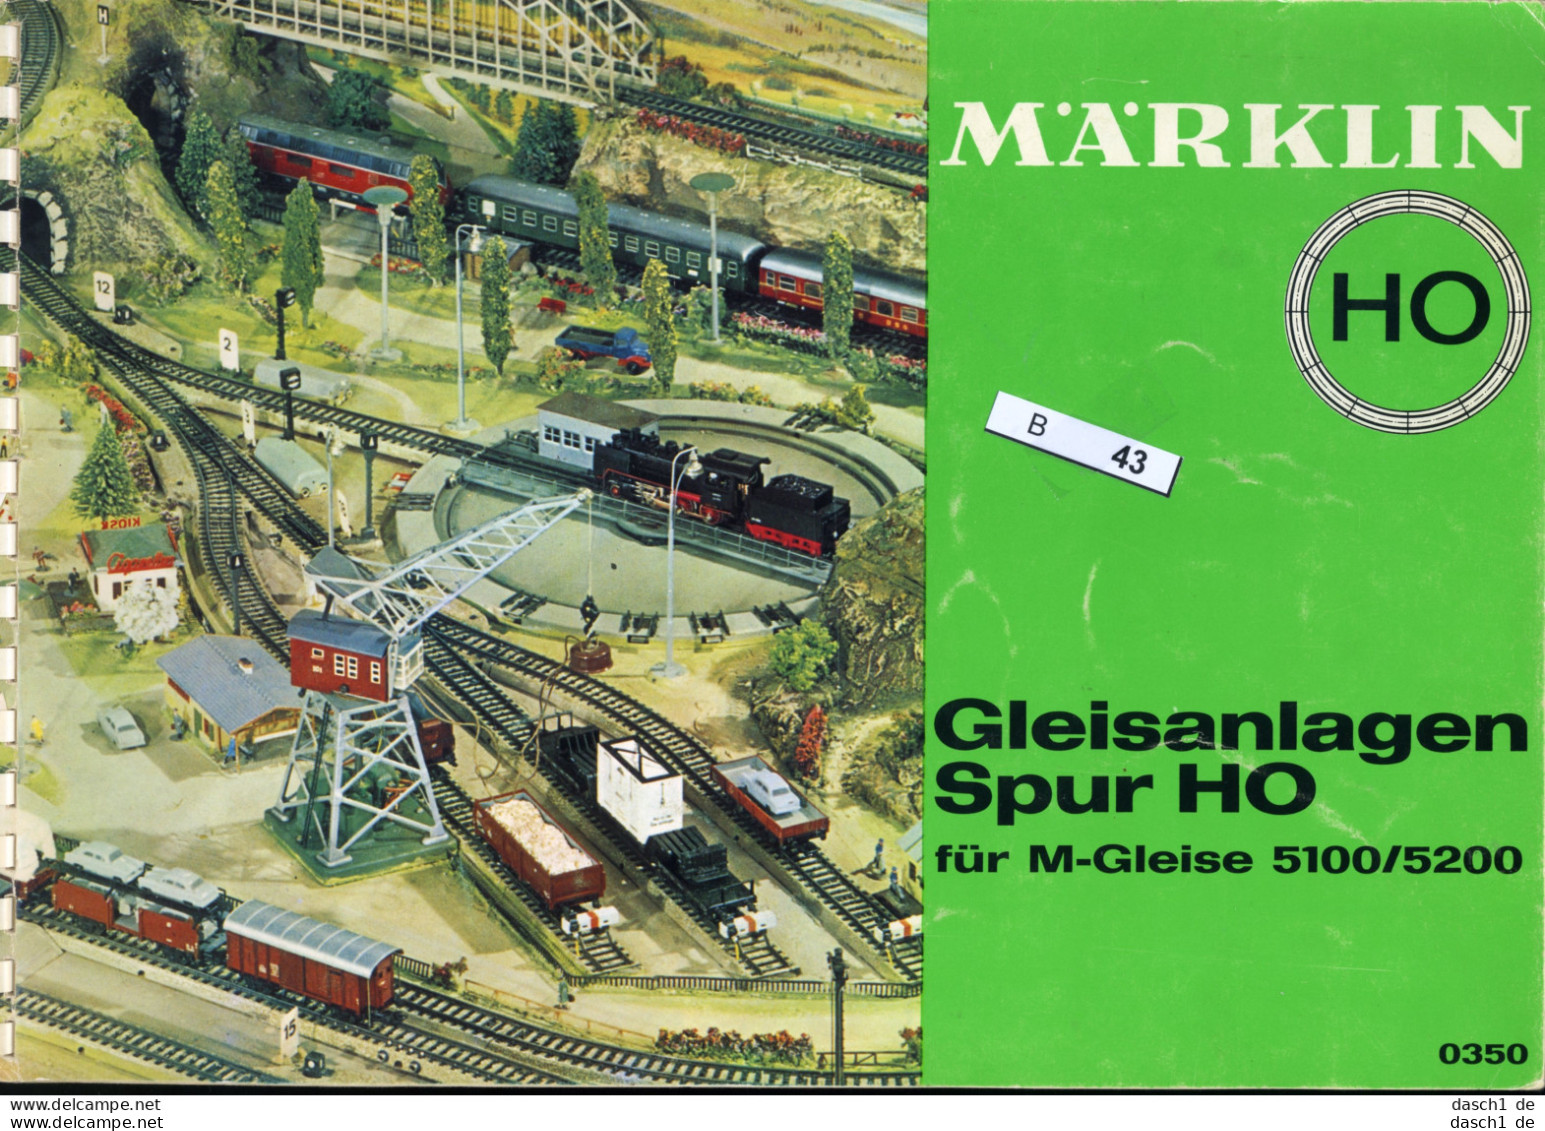 Märklin Gleisanlagen Spur H0, B-043 - Jouets & Miniatures